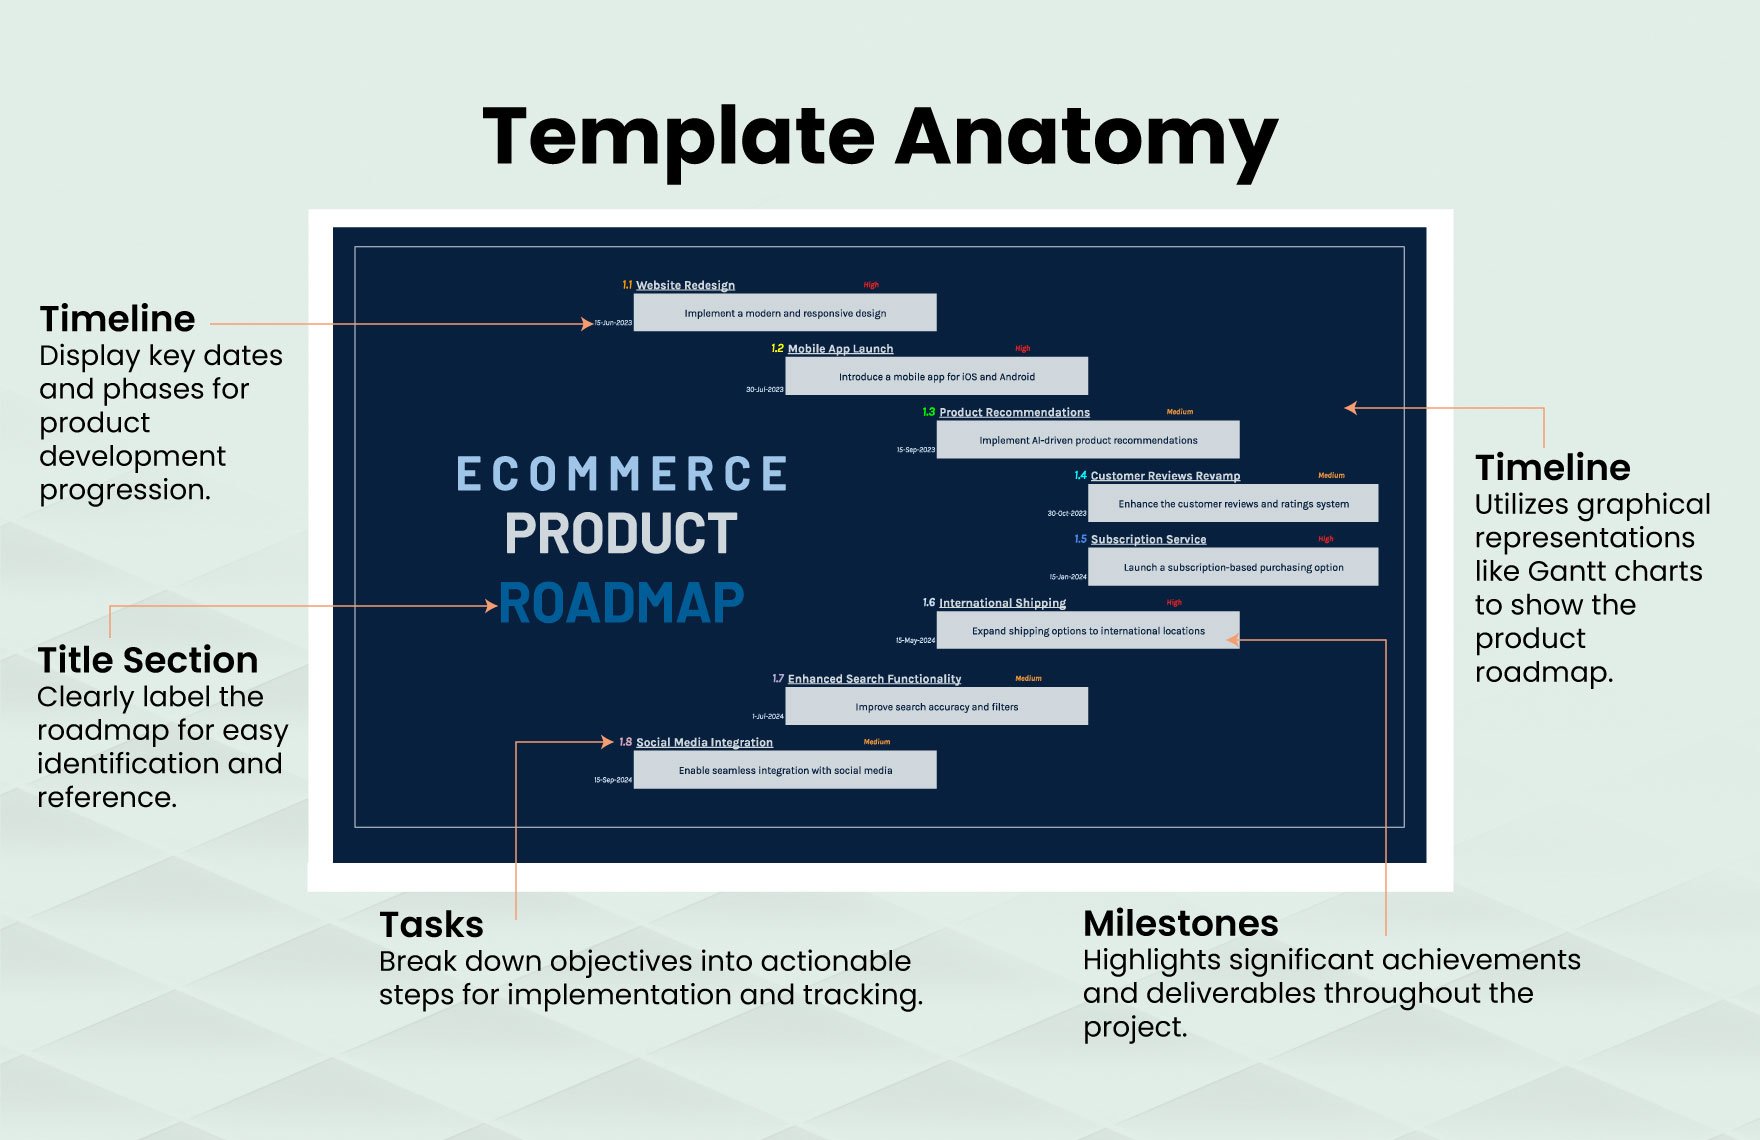 E-commerce Product Roadmap Template